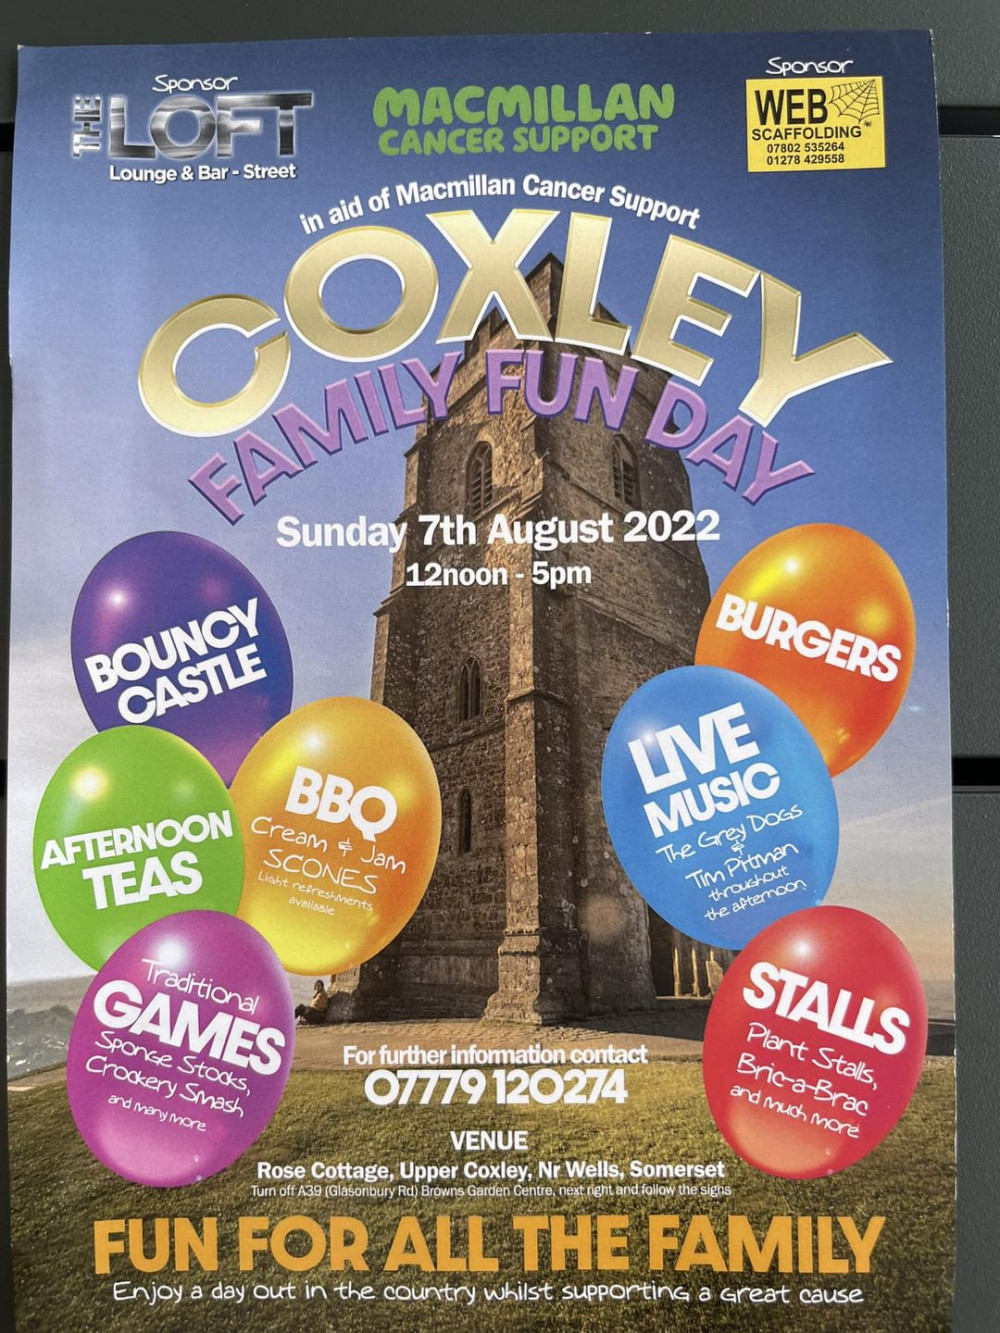 Coxley Family Fun Day